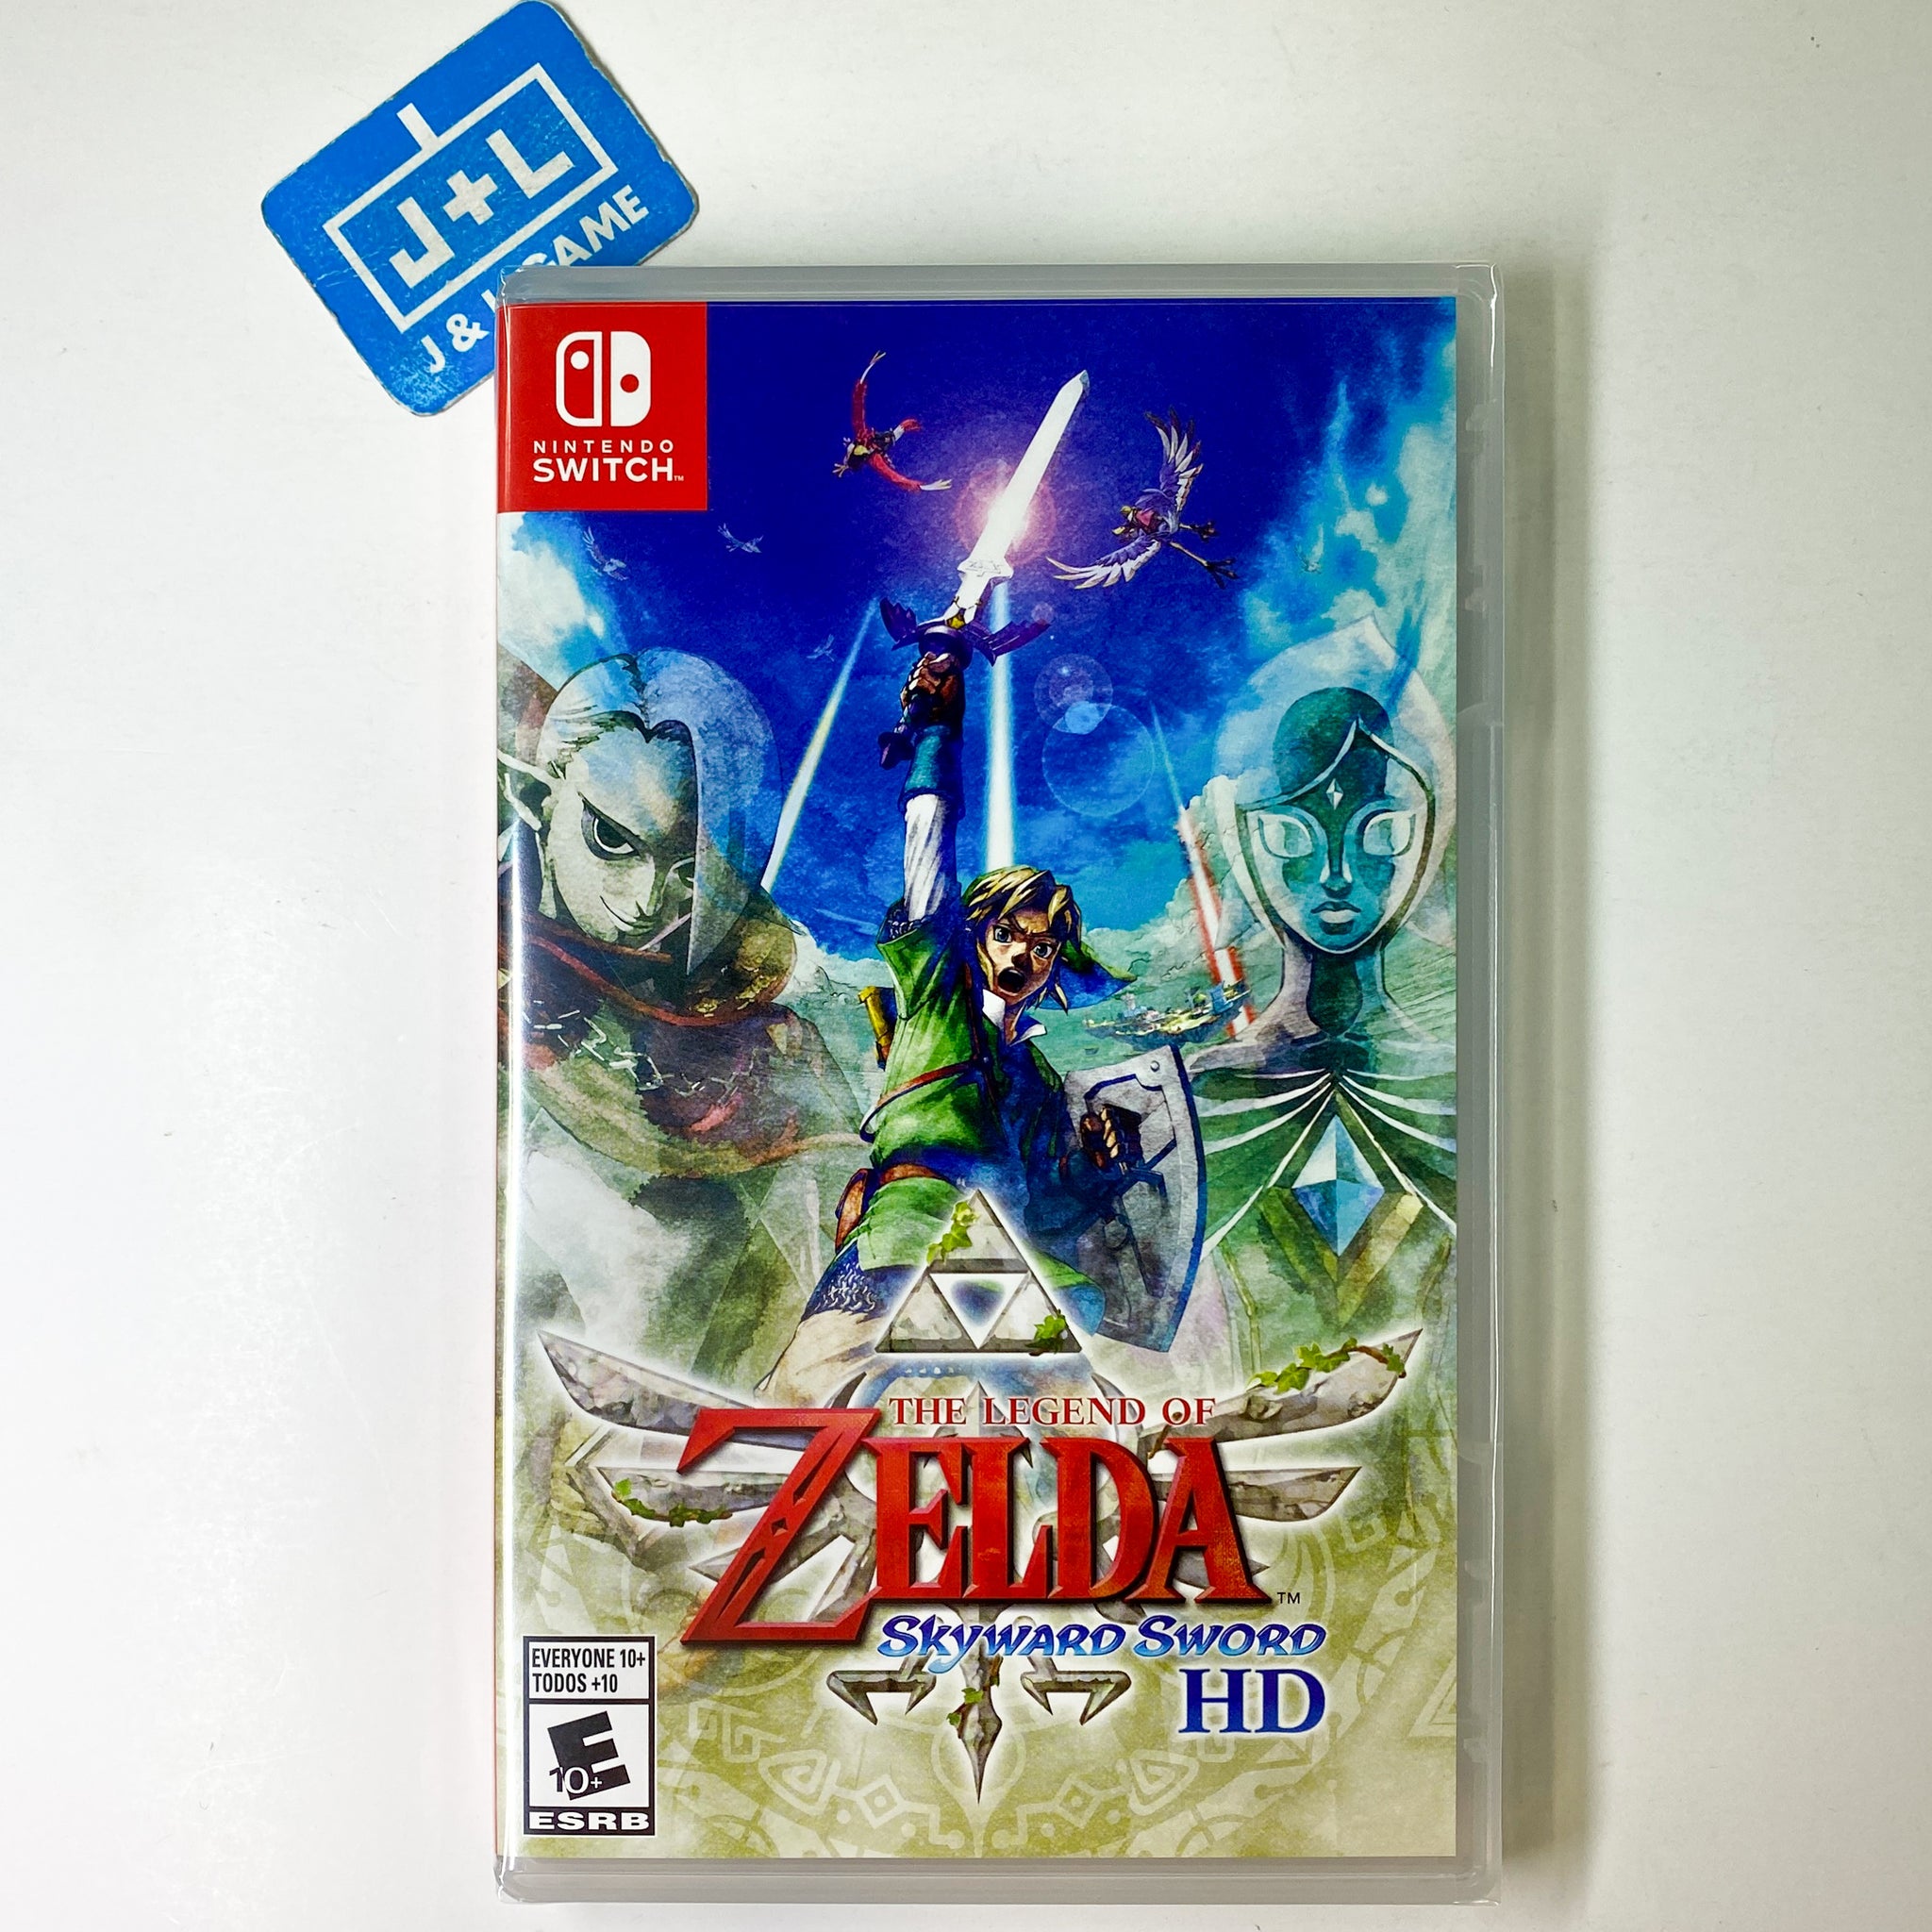 The Legend of Zelda: Skyward Sword HD - Nintendo Switch - Games